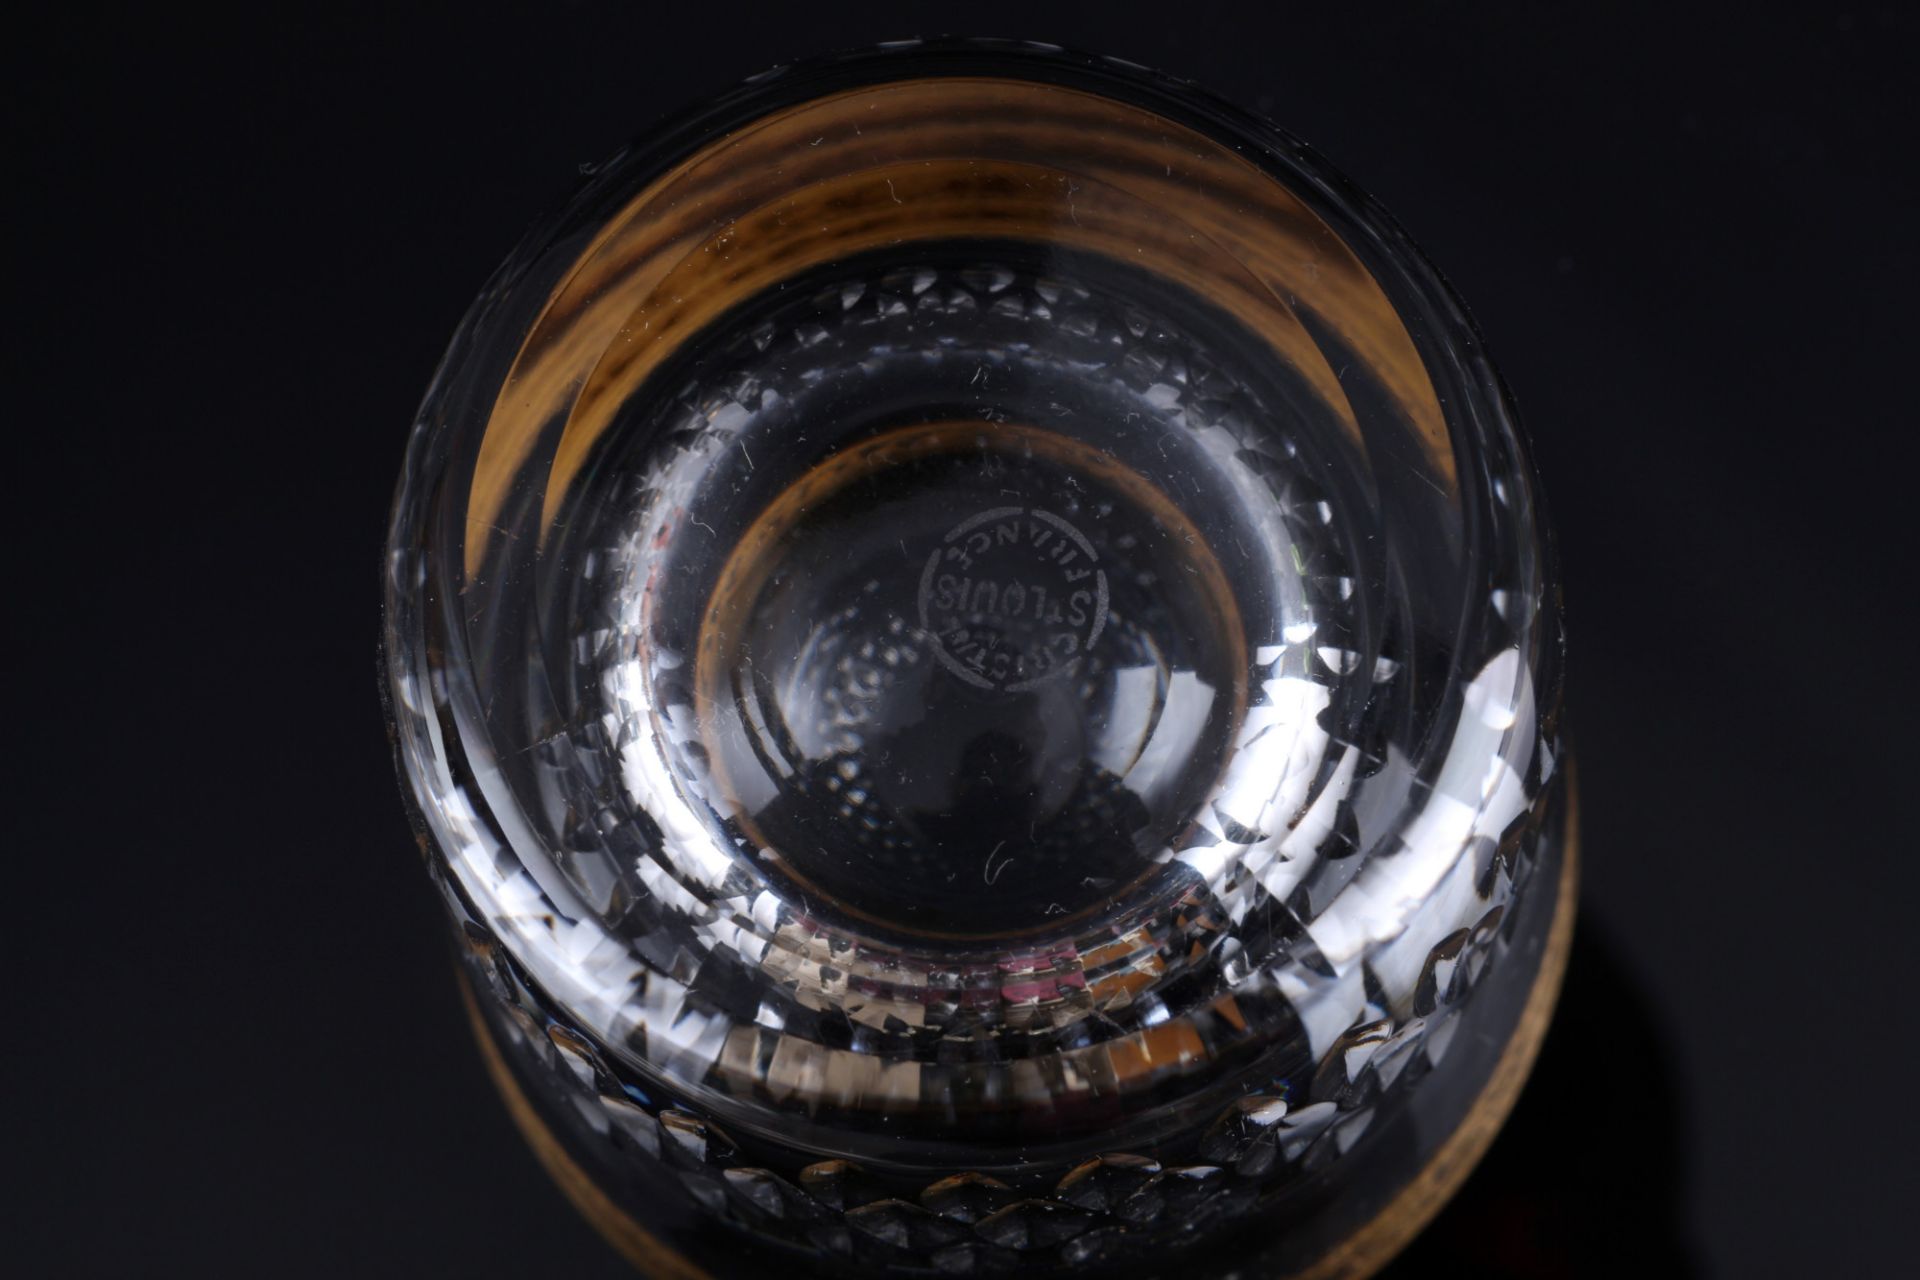 St. Louis Thistle Gold 6 Tumbler Whiskeybecher, old-fashioned whiskey glasses, - Bild 3 aus 3